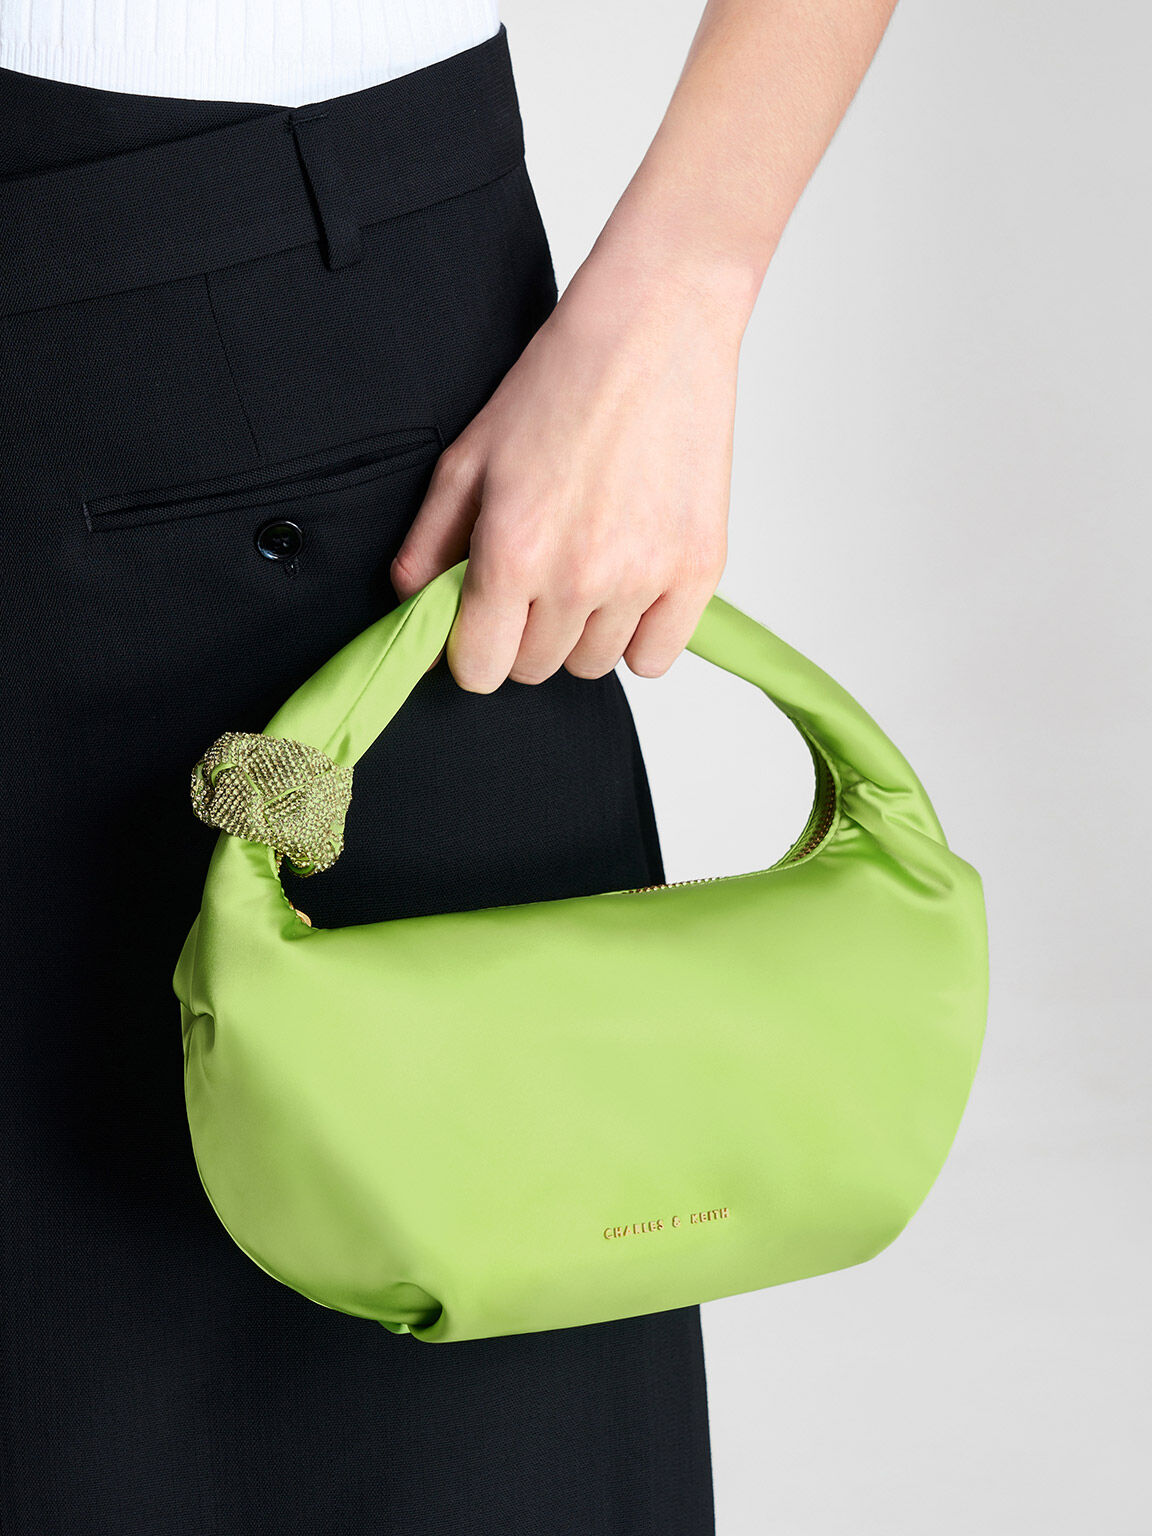 寶石釦扭結手提包, 綠色, hi-res